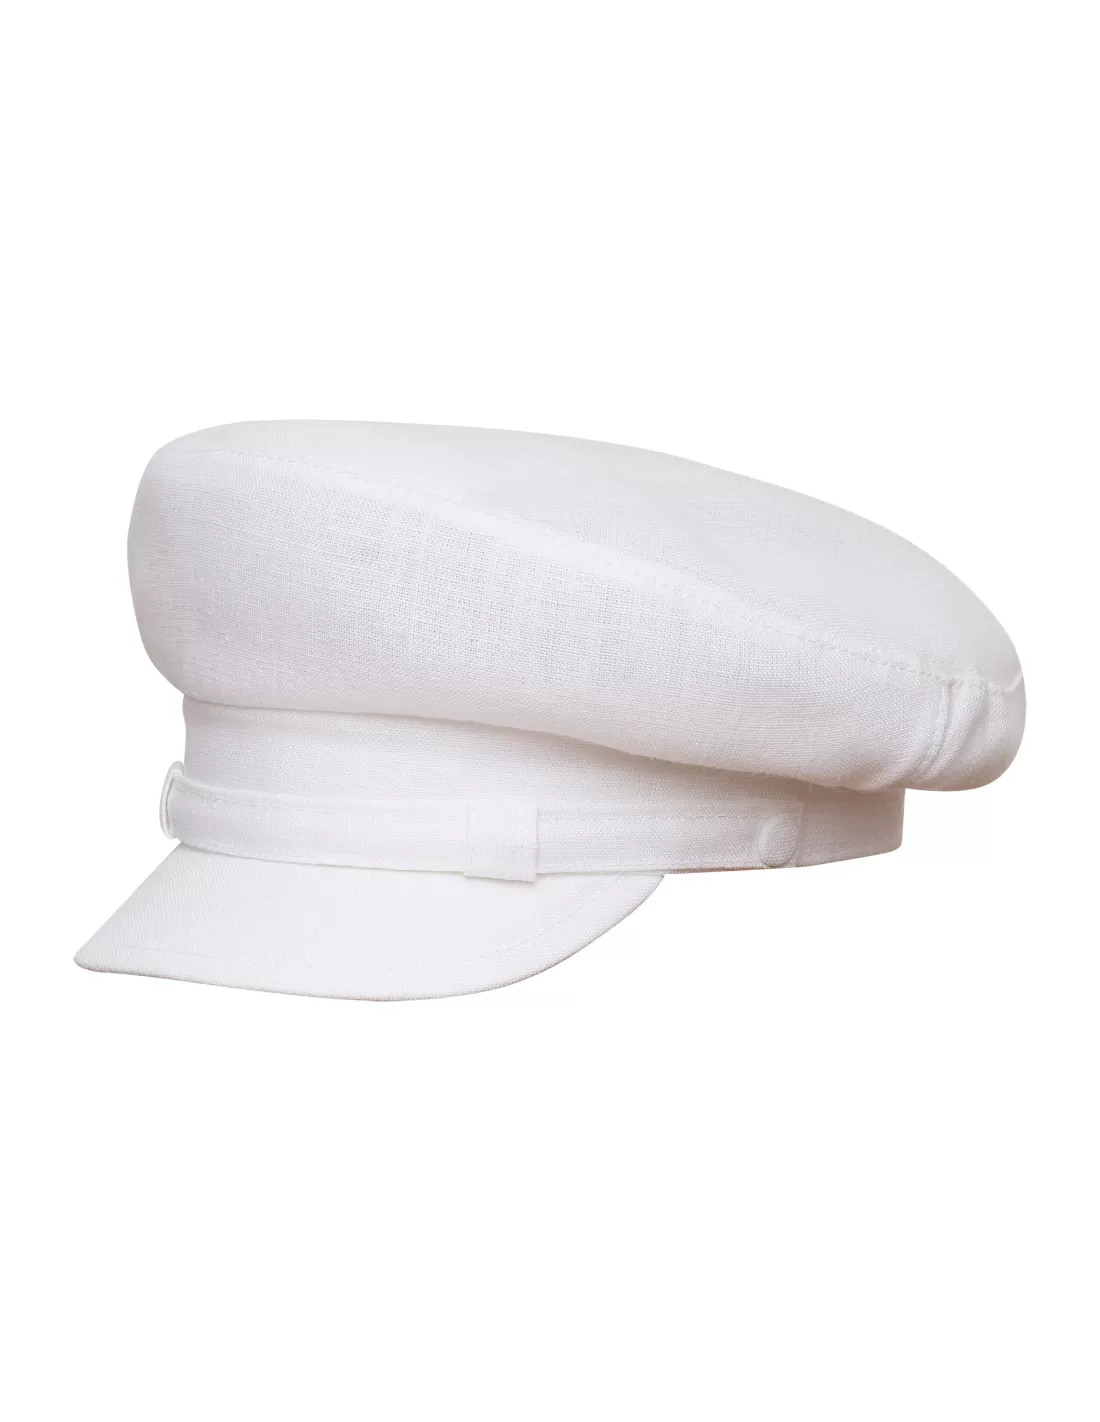 Maciejowka Model 6 Liverpool cap made of 100% linen. John Lennon cap ...